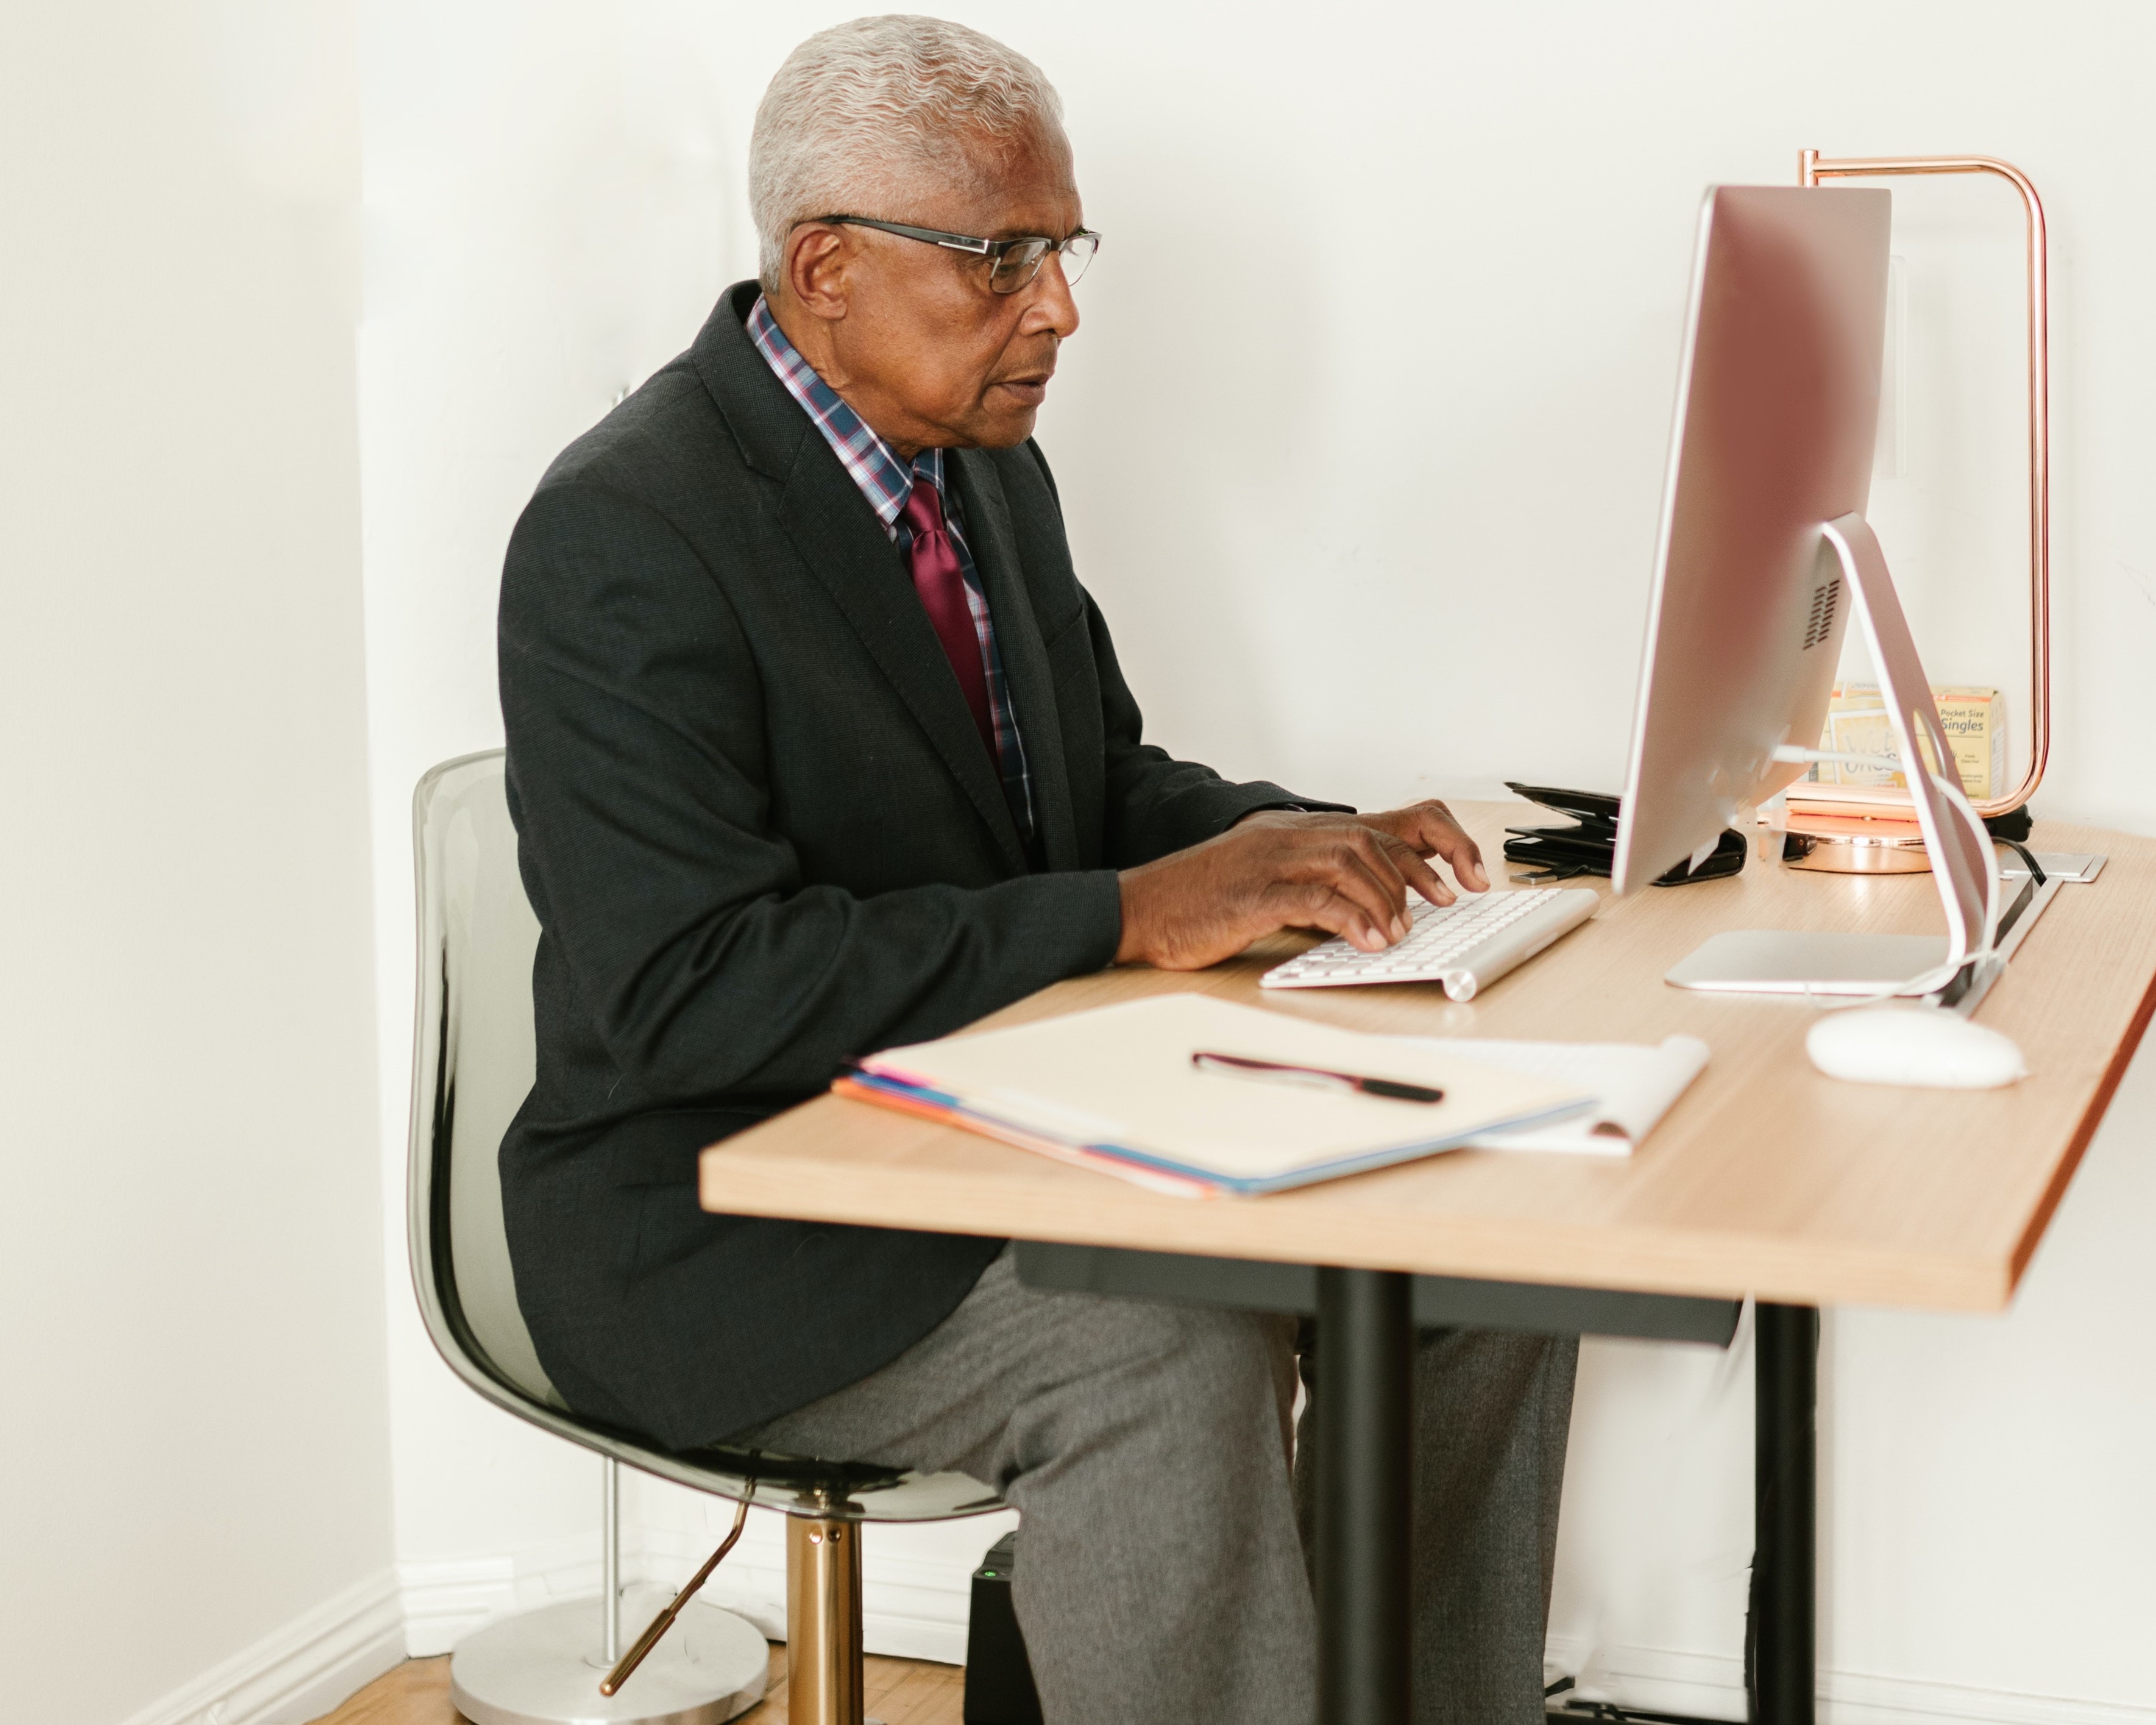 Older man working at computer